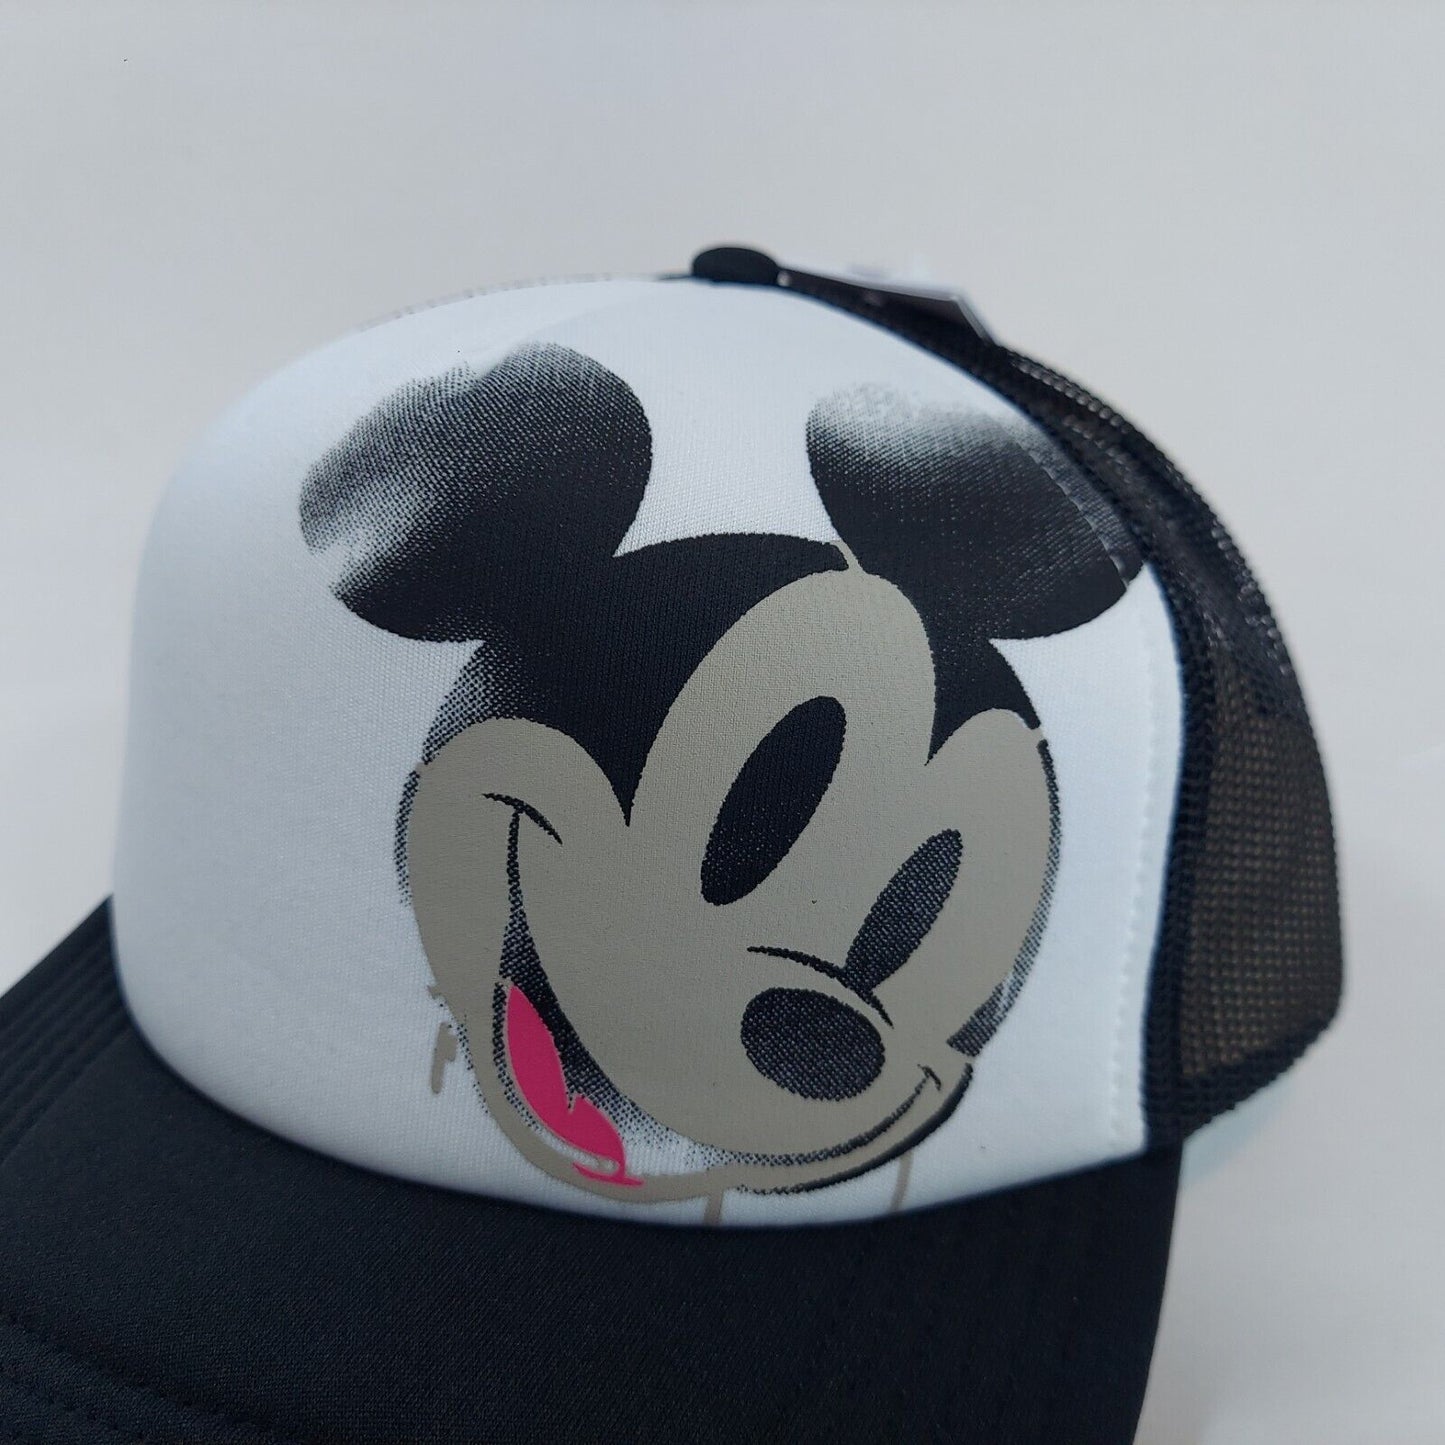 Neff x Disney Mickey Mouse Black/White Padded Truckers Cap Snapback Brand New